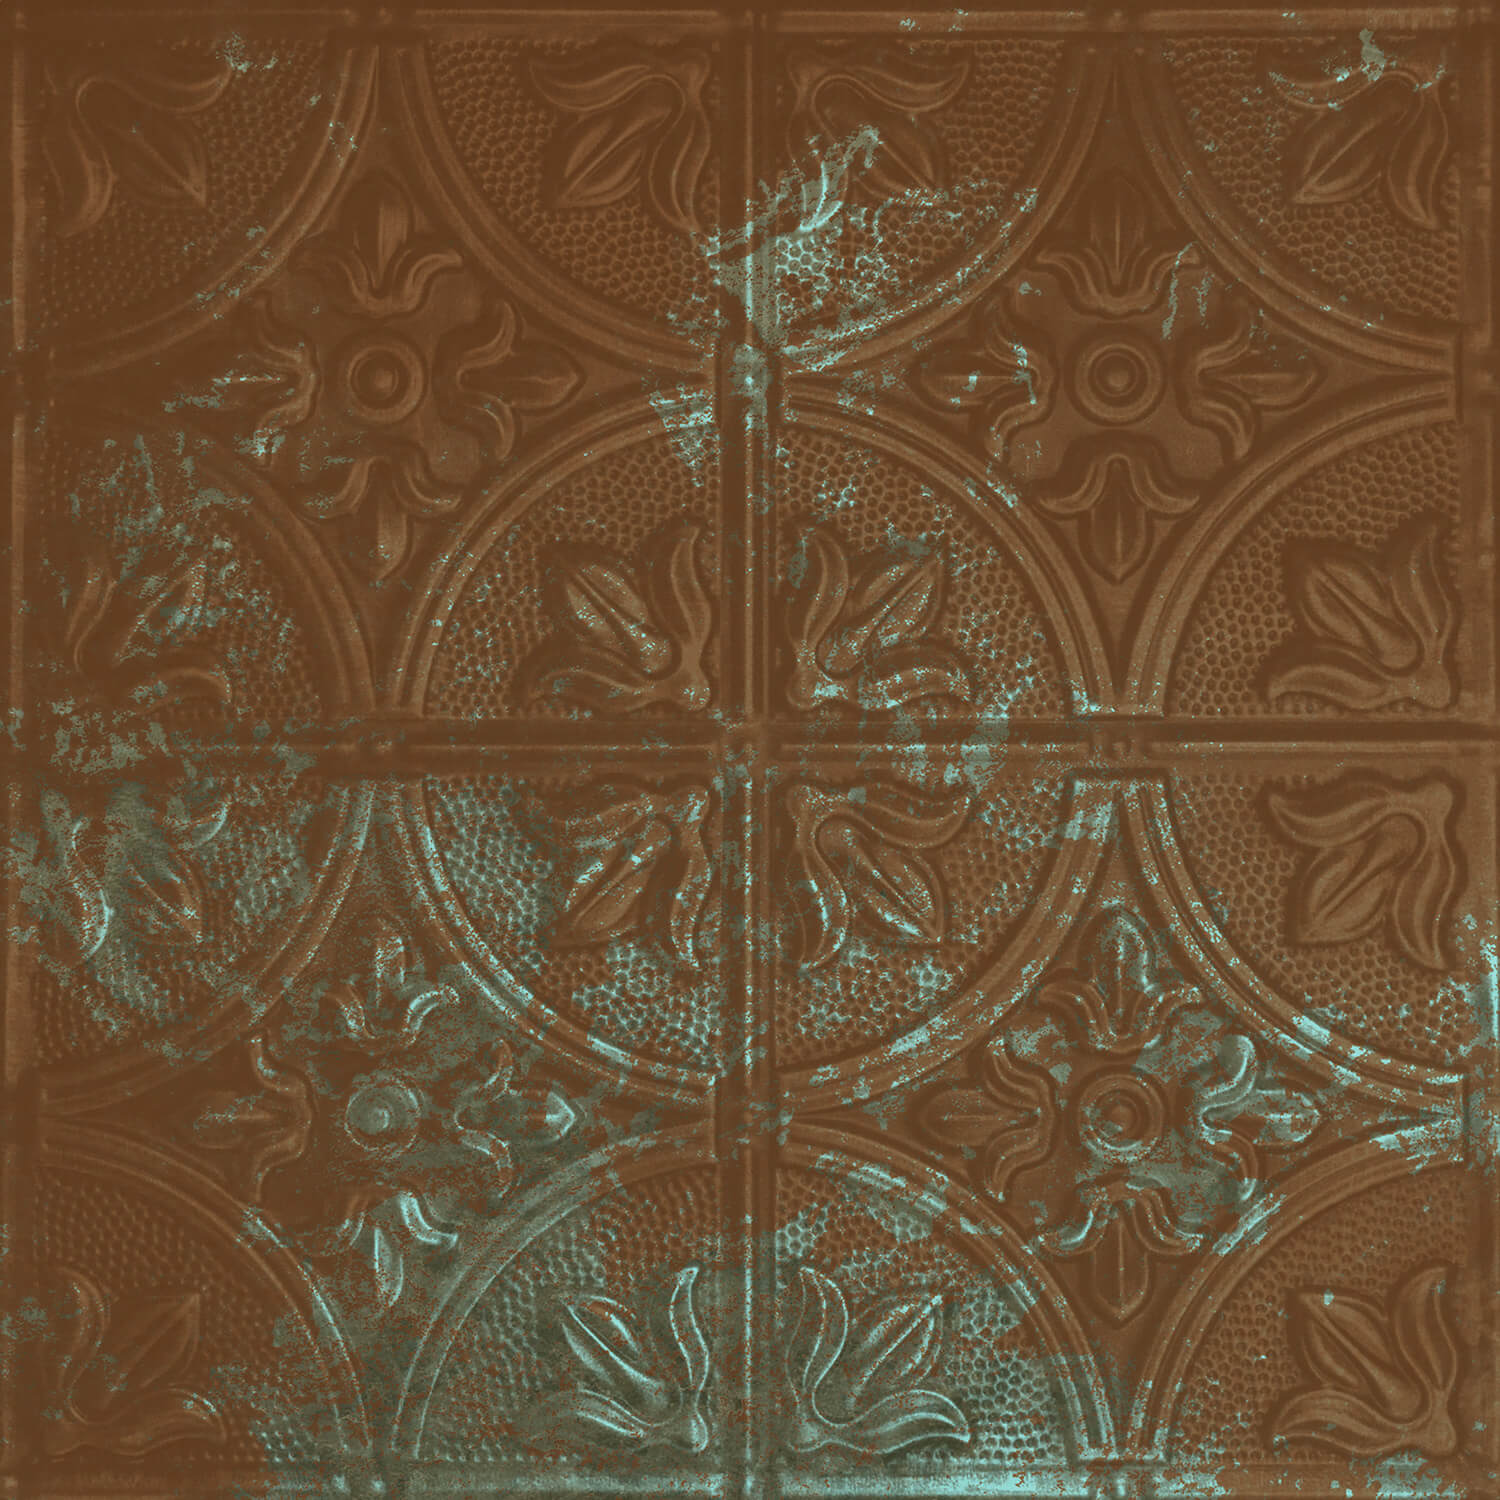 Tin Ceiling Xpress - Antique Copper Patina Finish